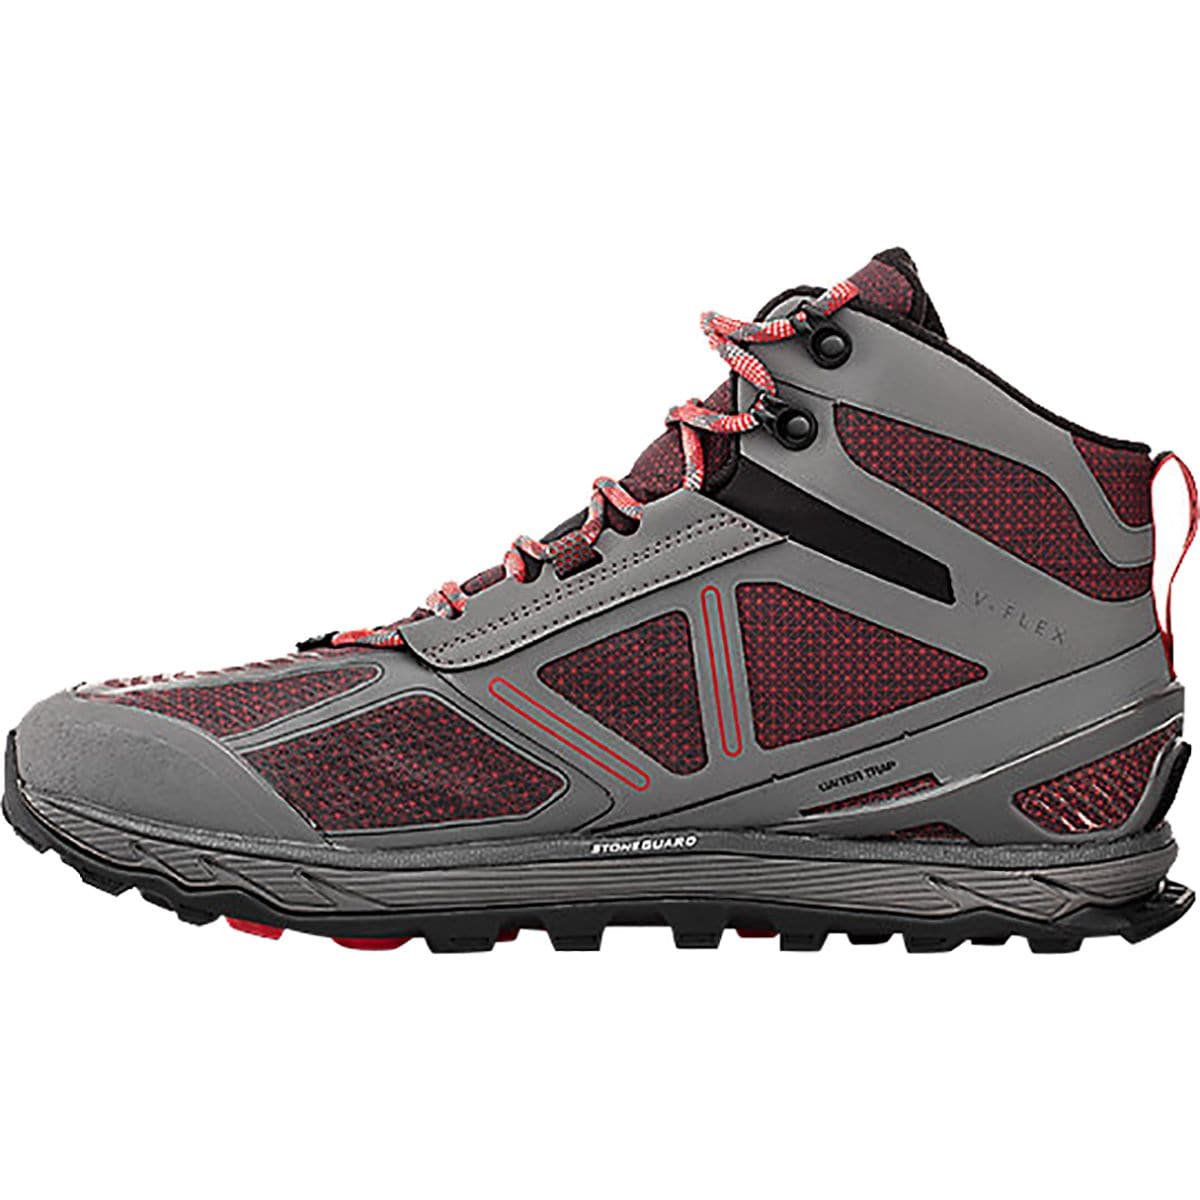 Altra Lone Peak 4.0 Mid RSM Trail Running Shoe - Men's | Backcountry.com